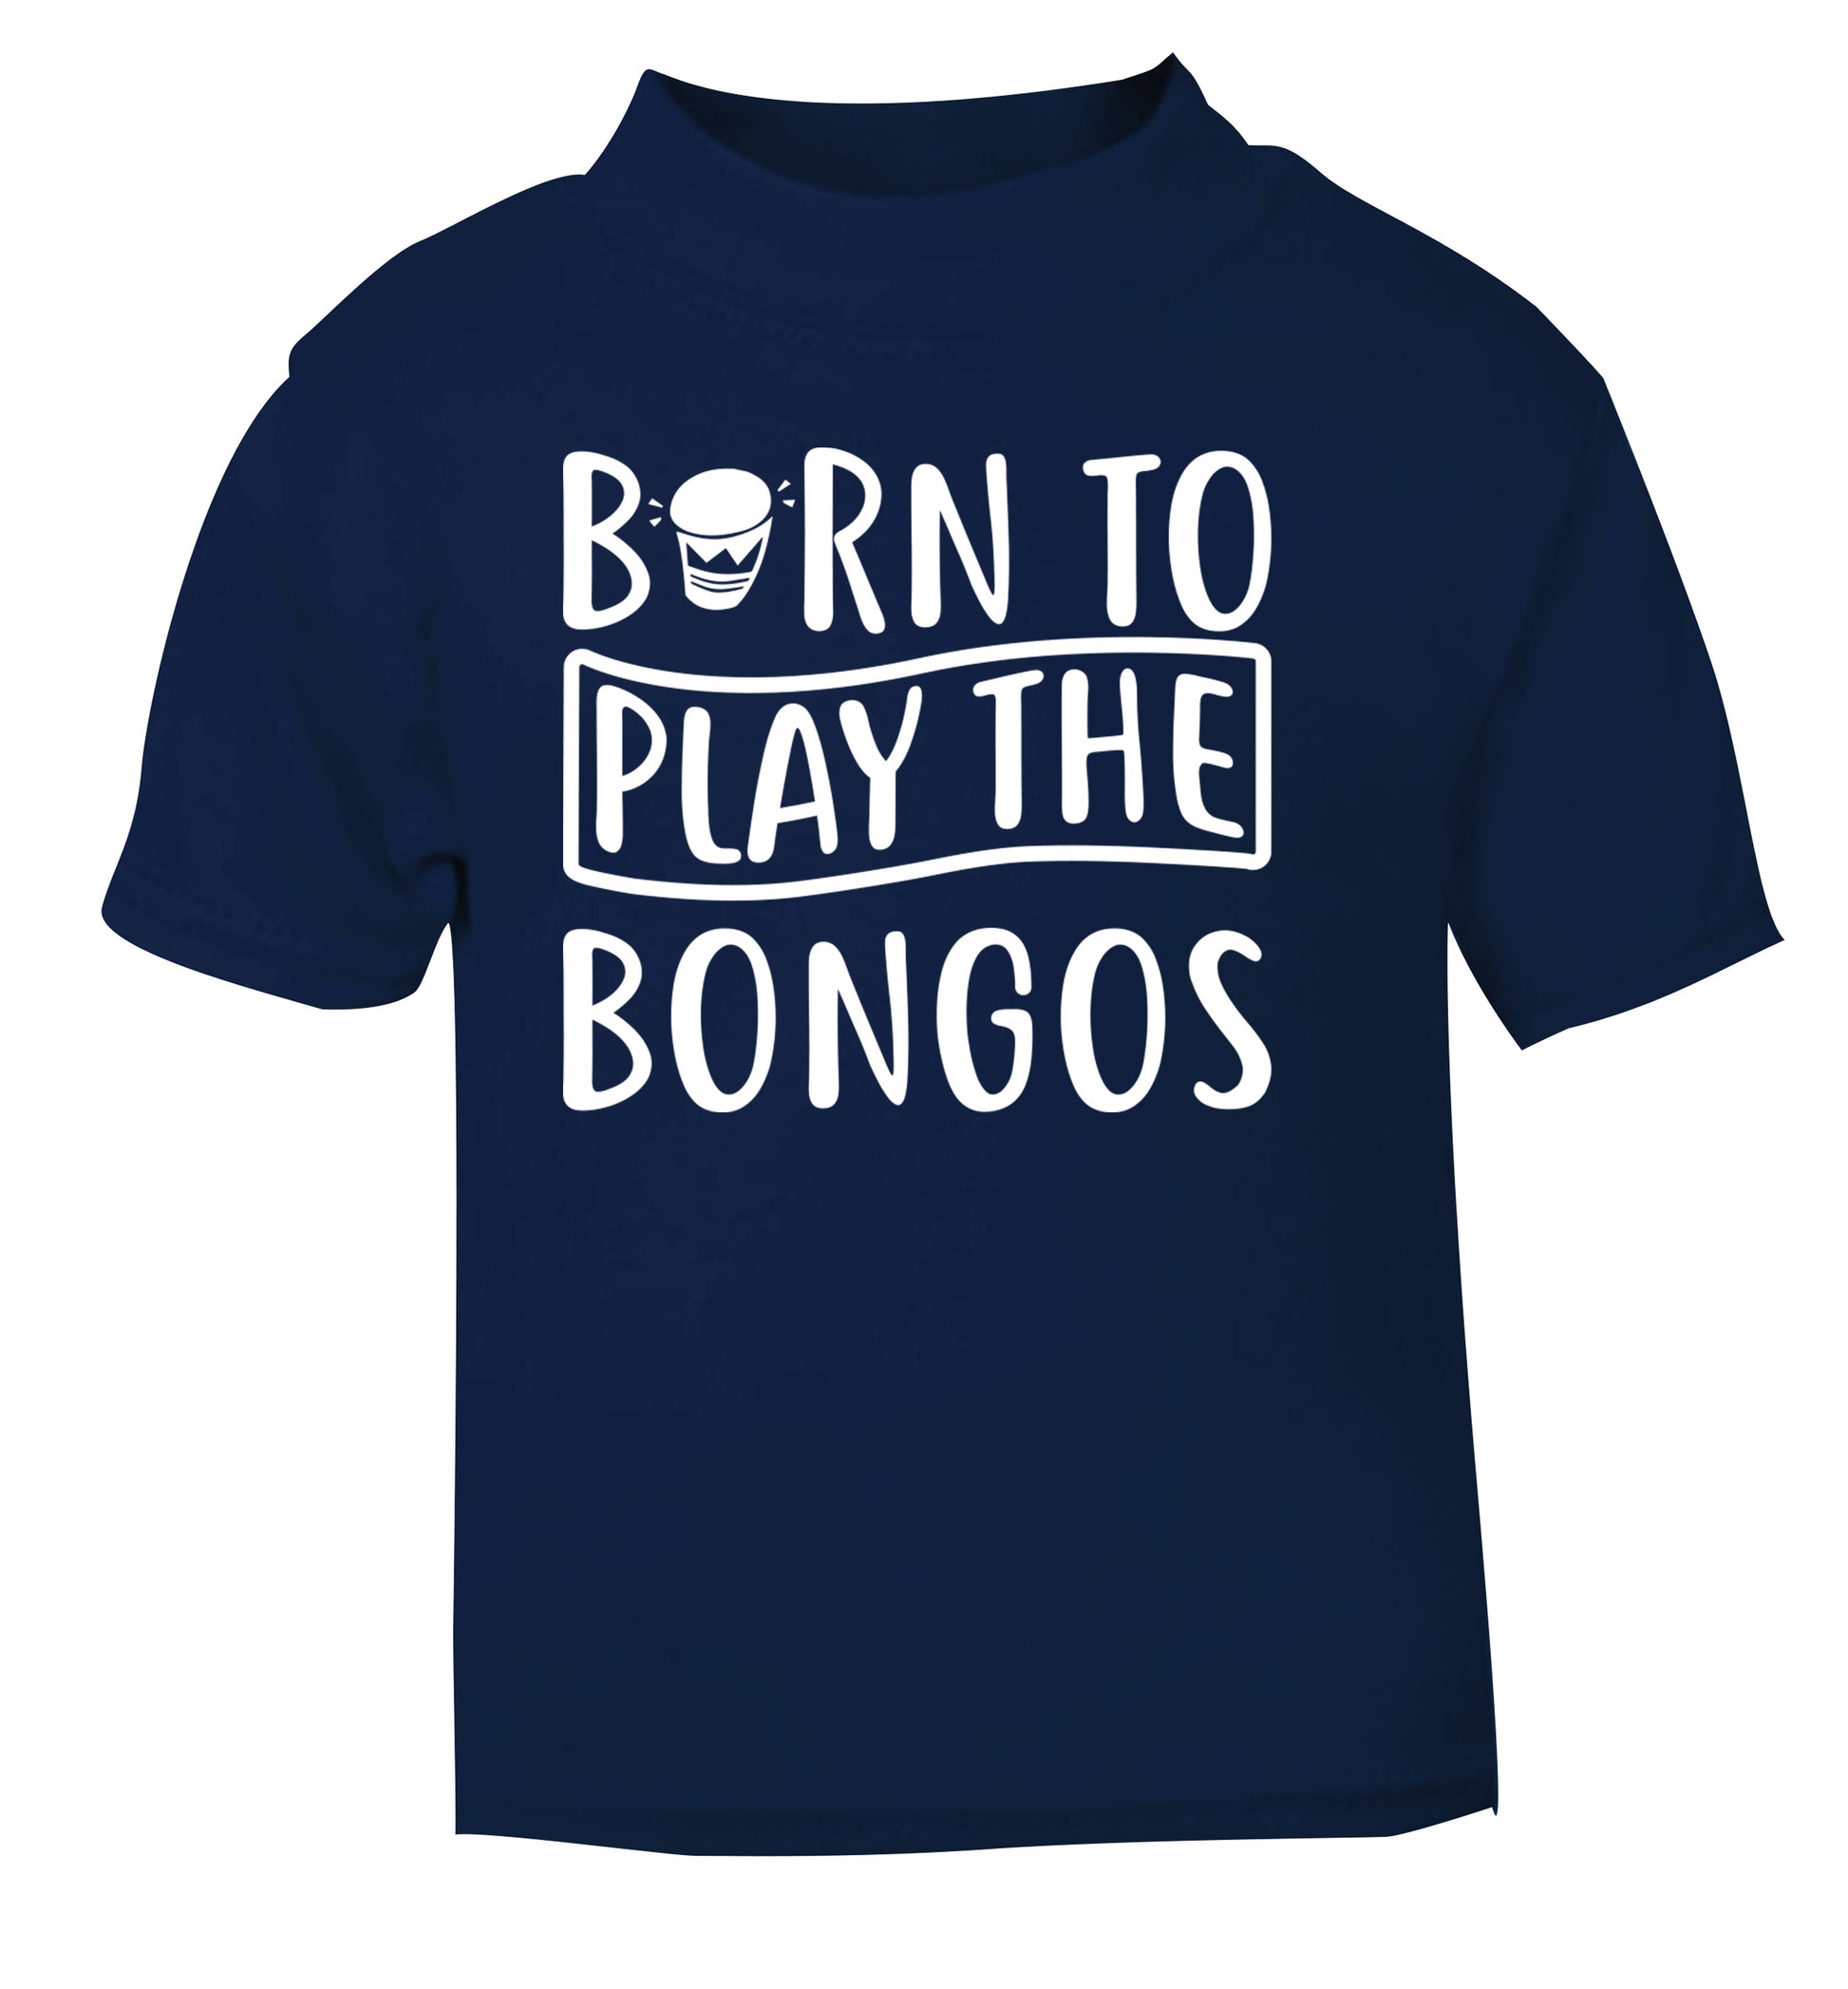 Born to play the bongos navy Baby Toddler Tshirt 2 Years